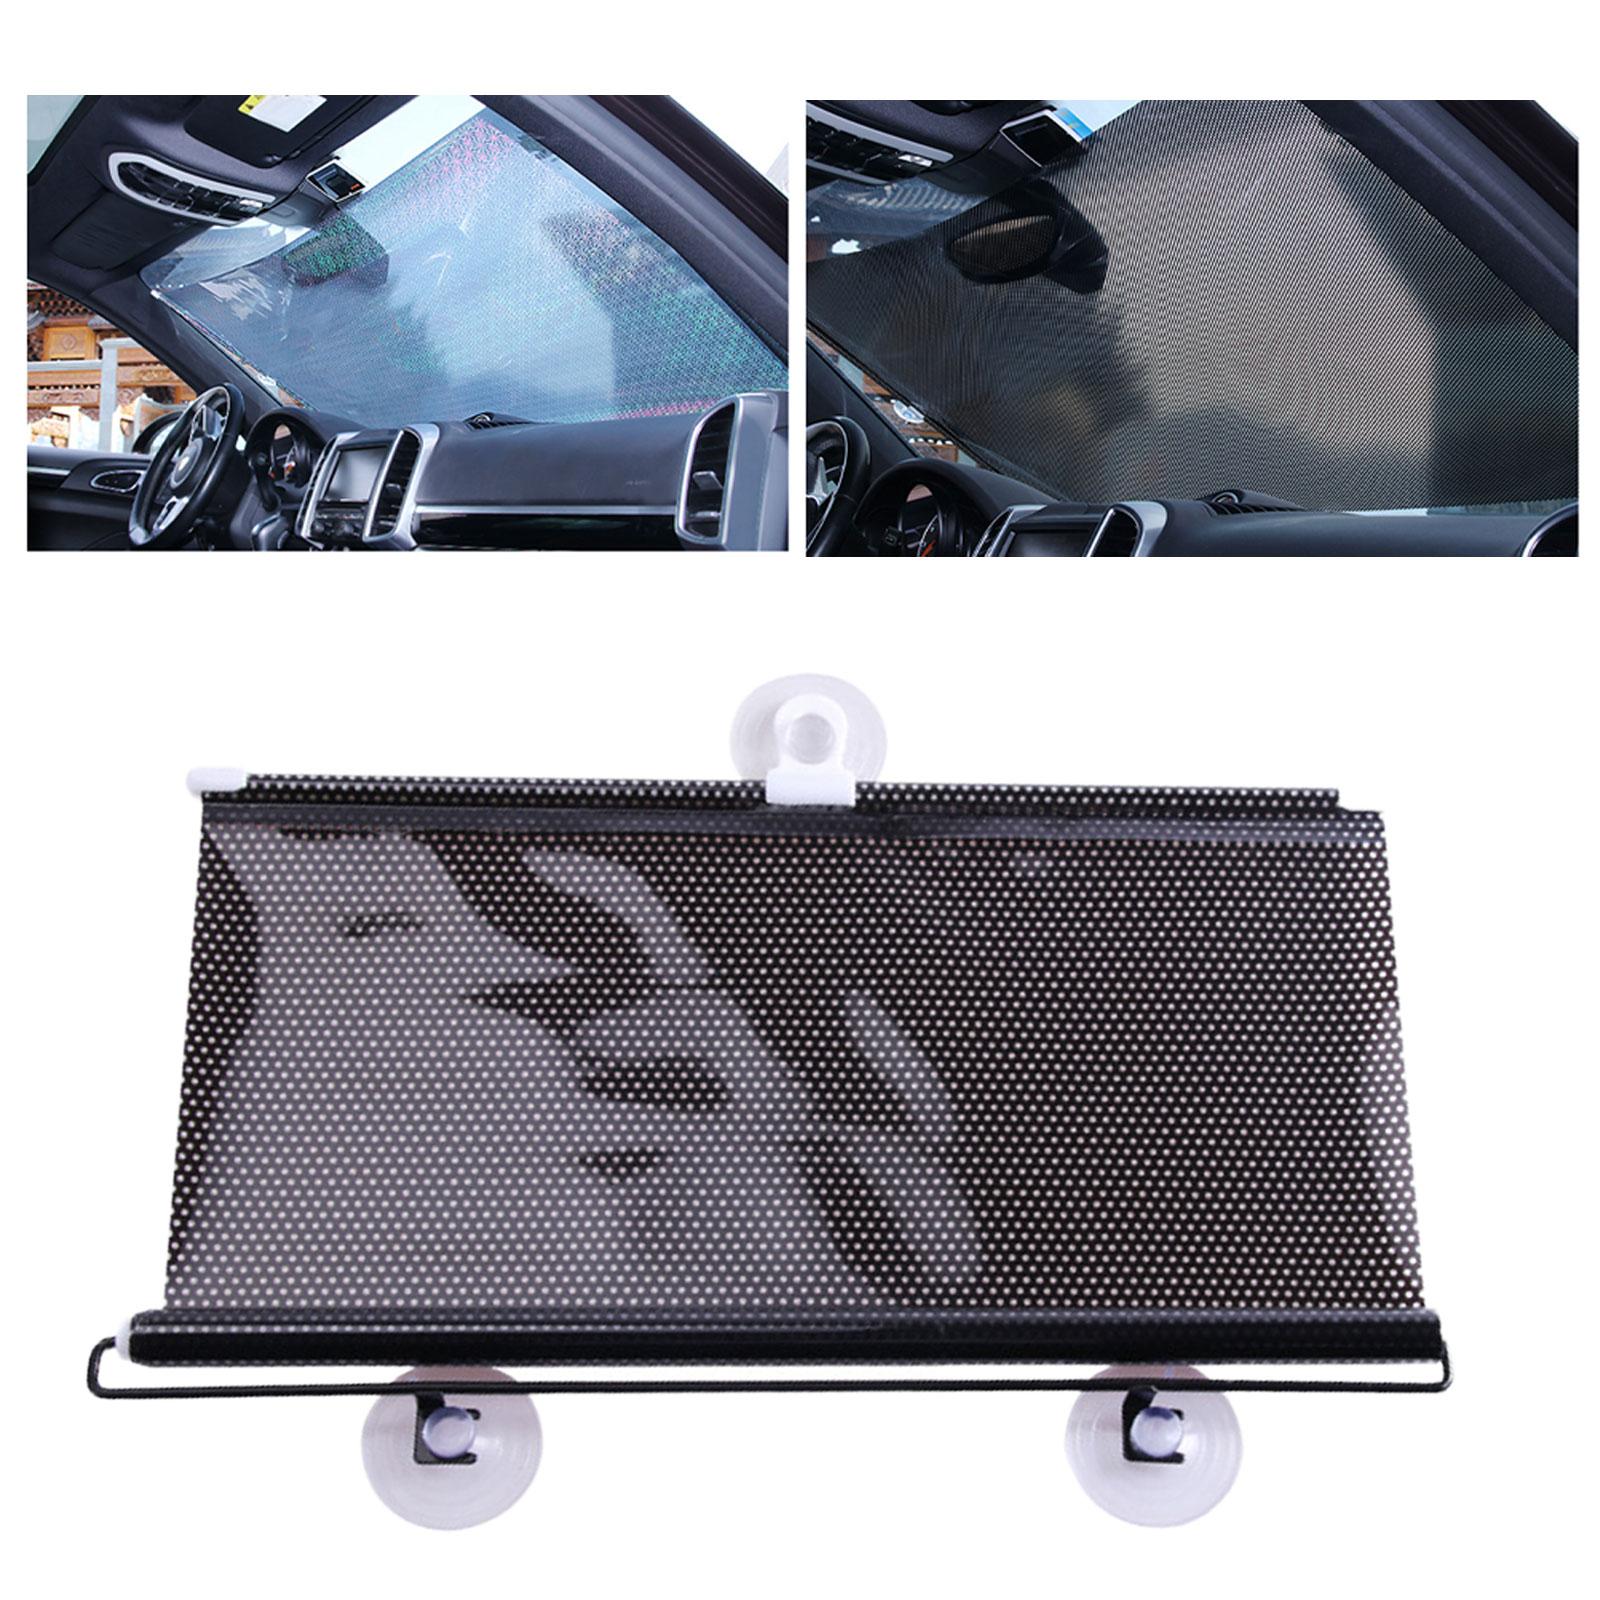 Car Windshield Sunshade Block UV Rays Car Shade for Most Cars, Vehicles 68cmx125cm